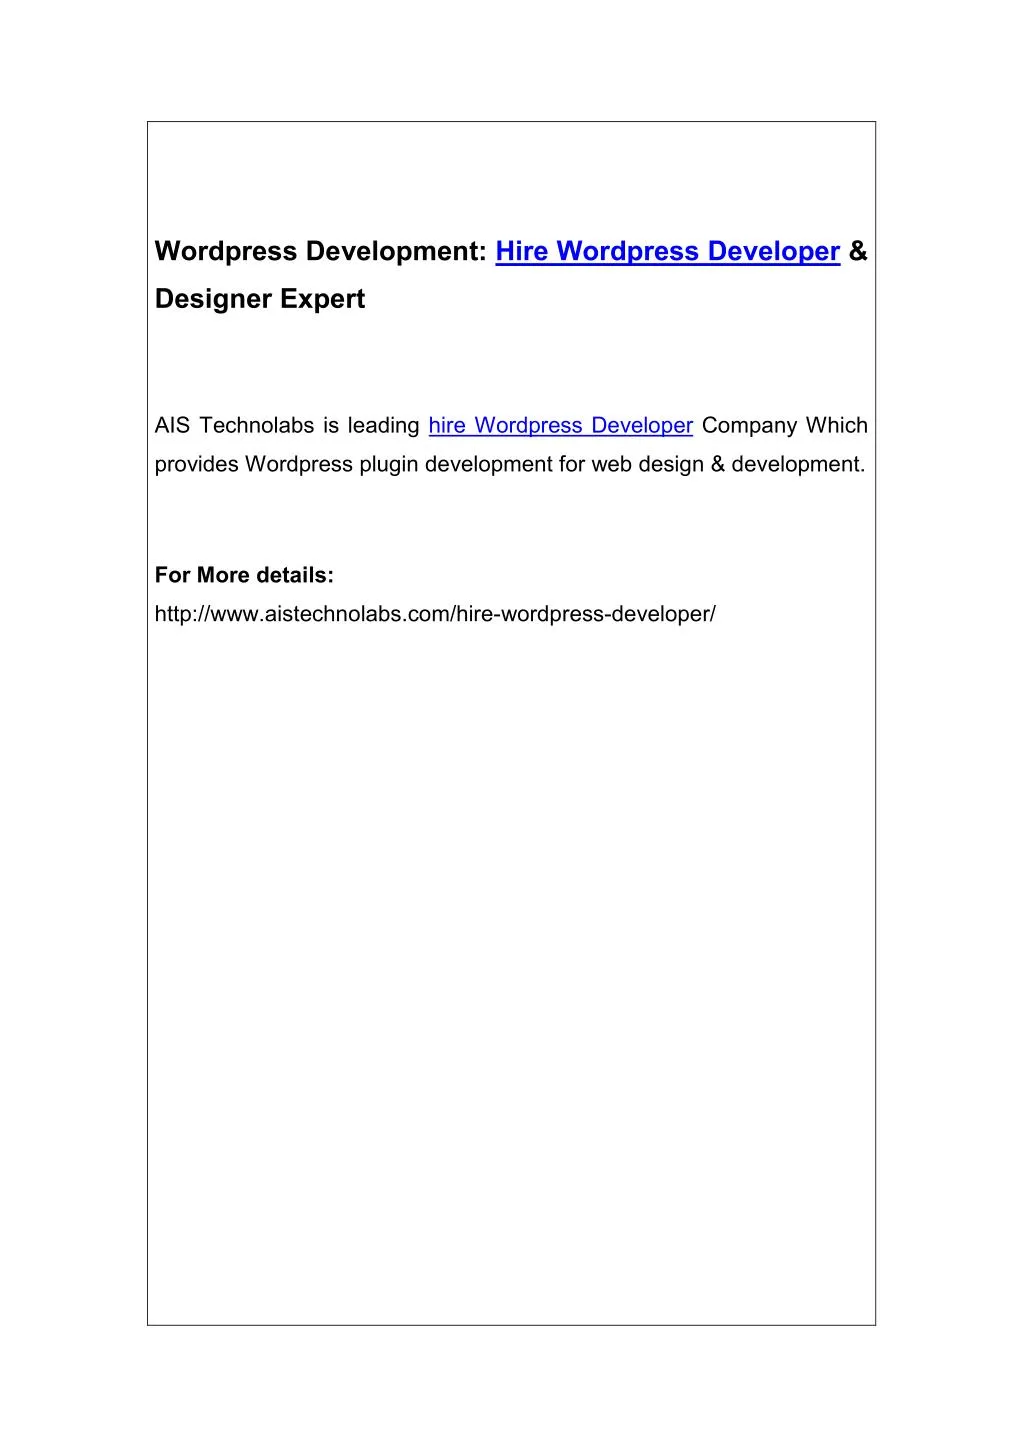 wordpress development hire wordpress developer